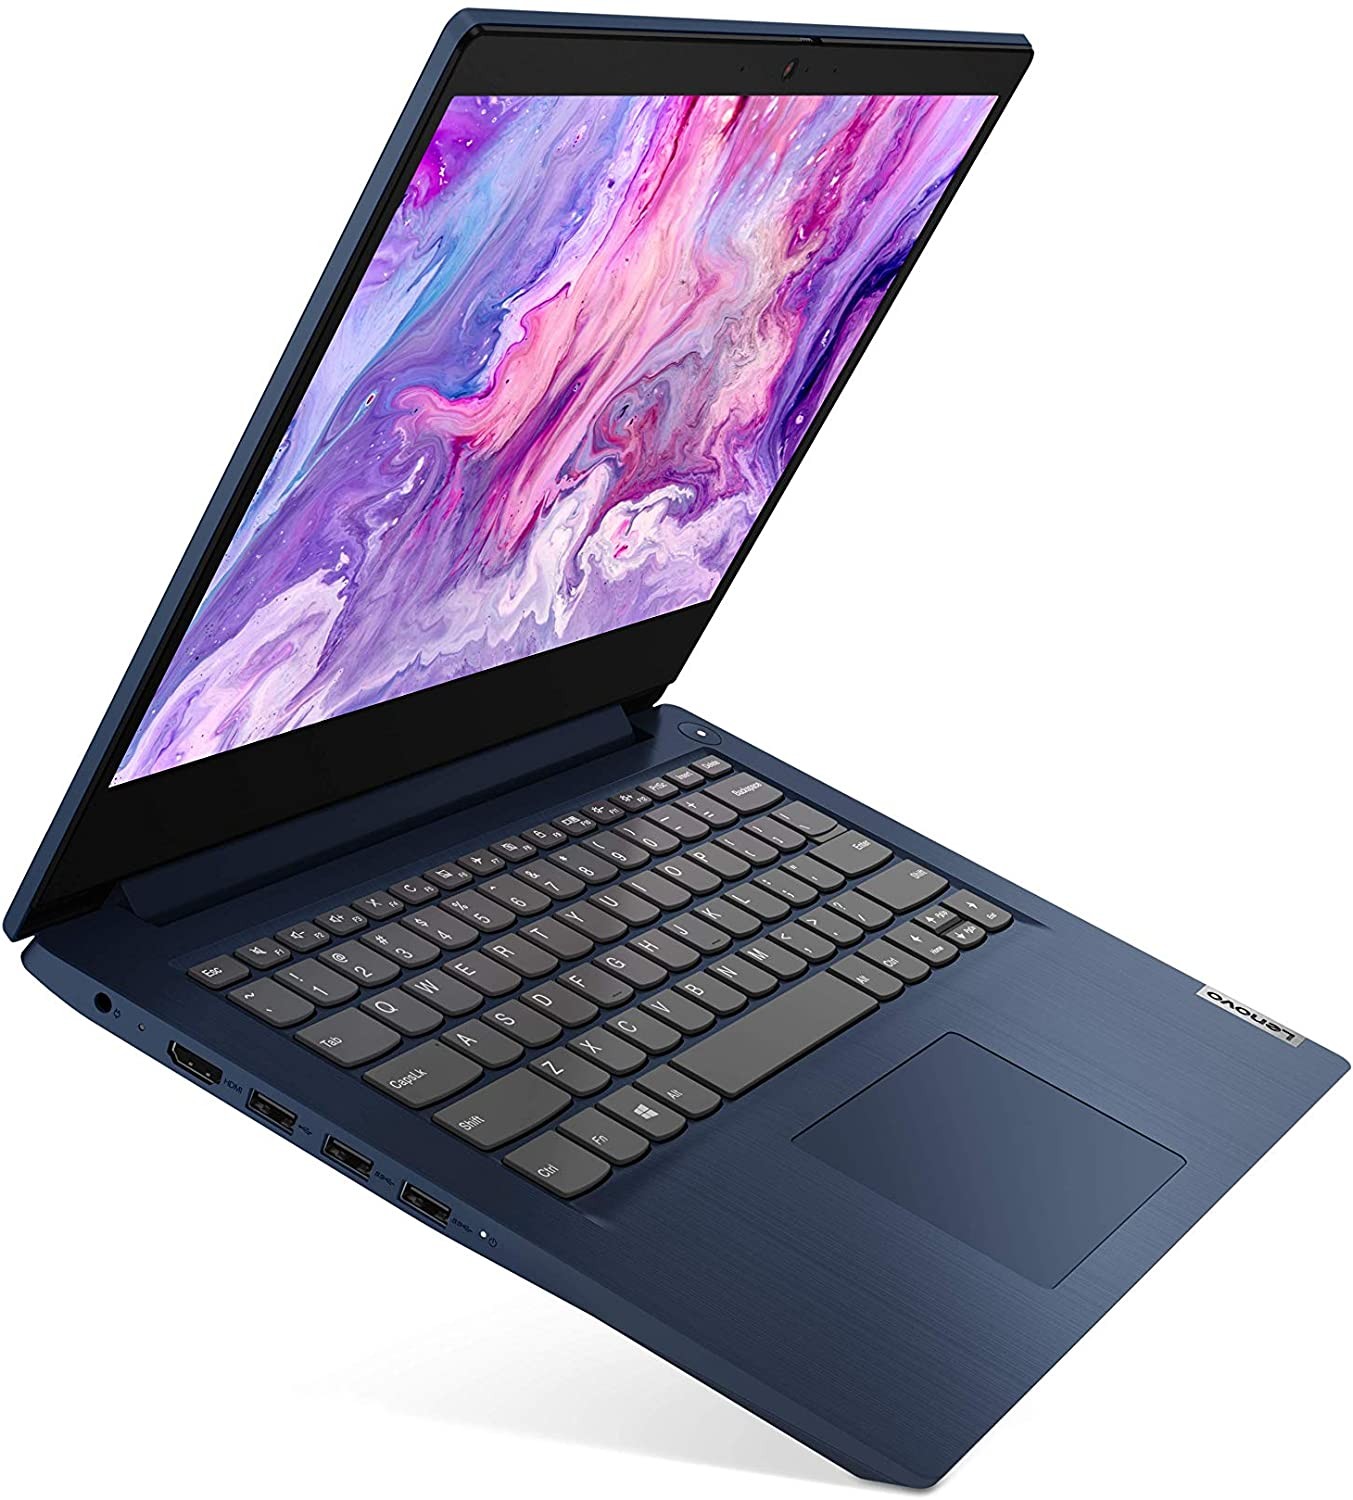 Ноутбук Lenovo Ideapad 3 14ada05 Купить